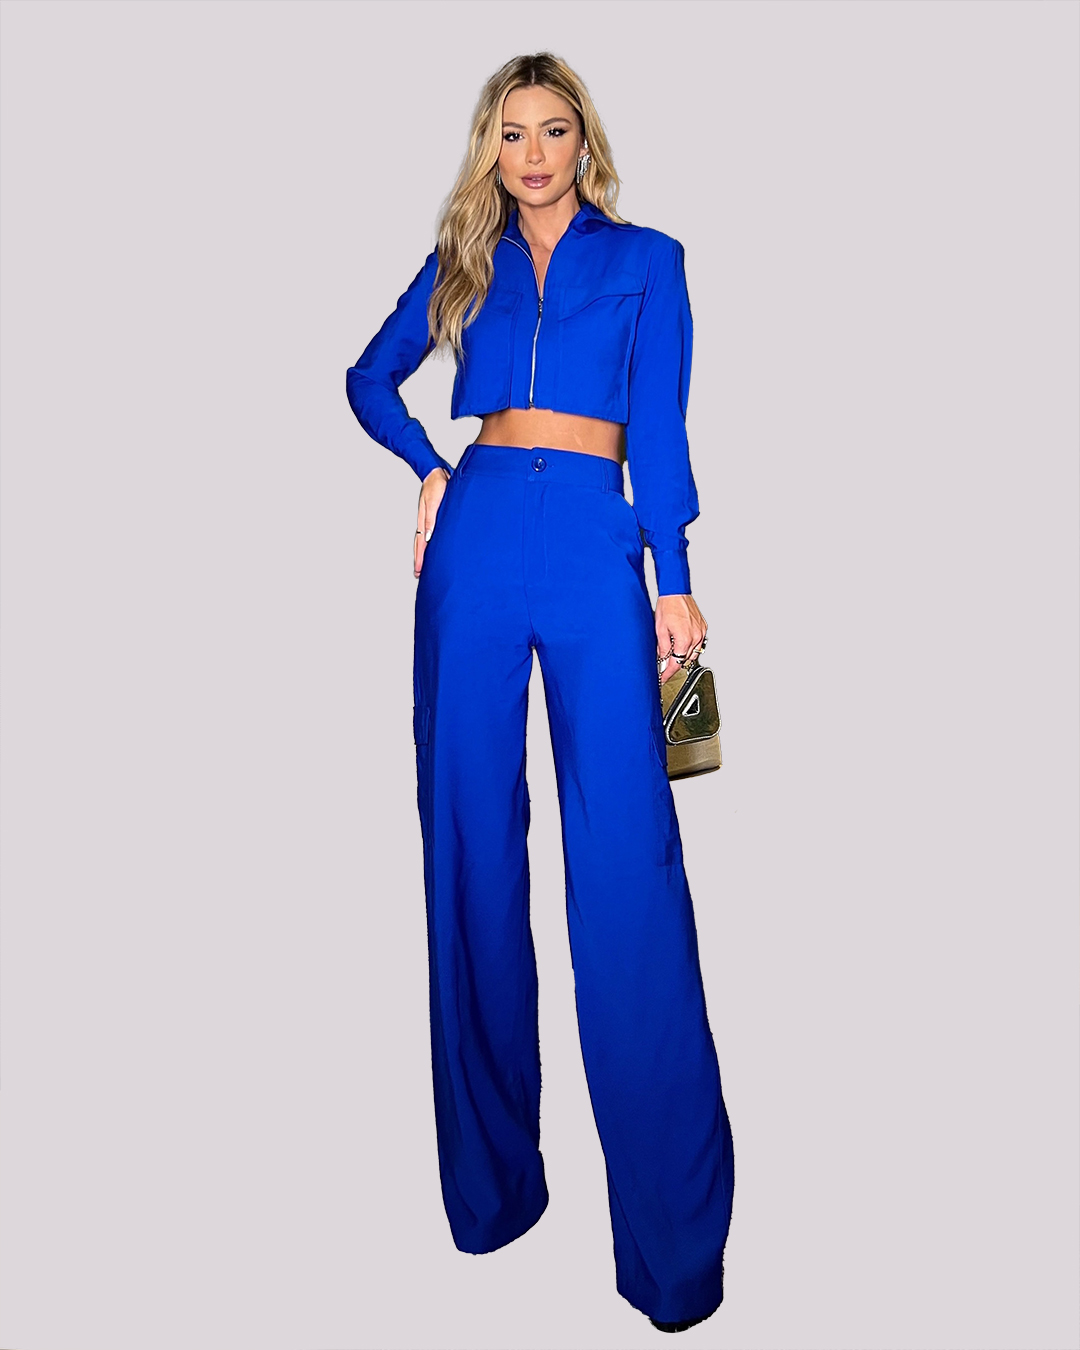 Dot Clothing - Conjunto Dot Clothing Pantalona Azul - 1897AZUL